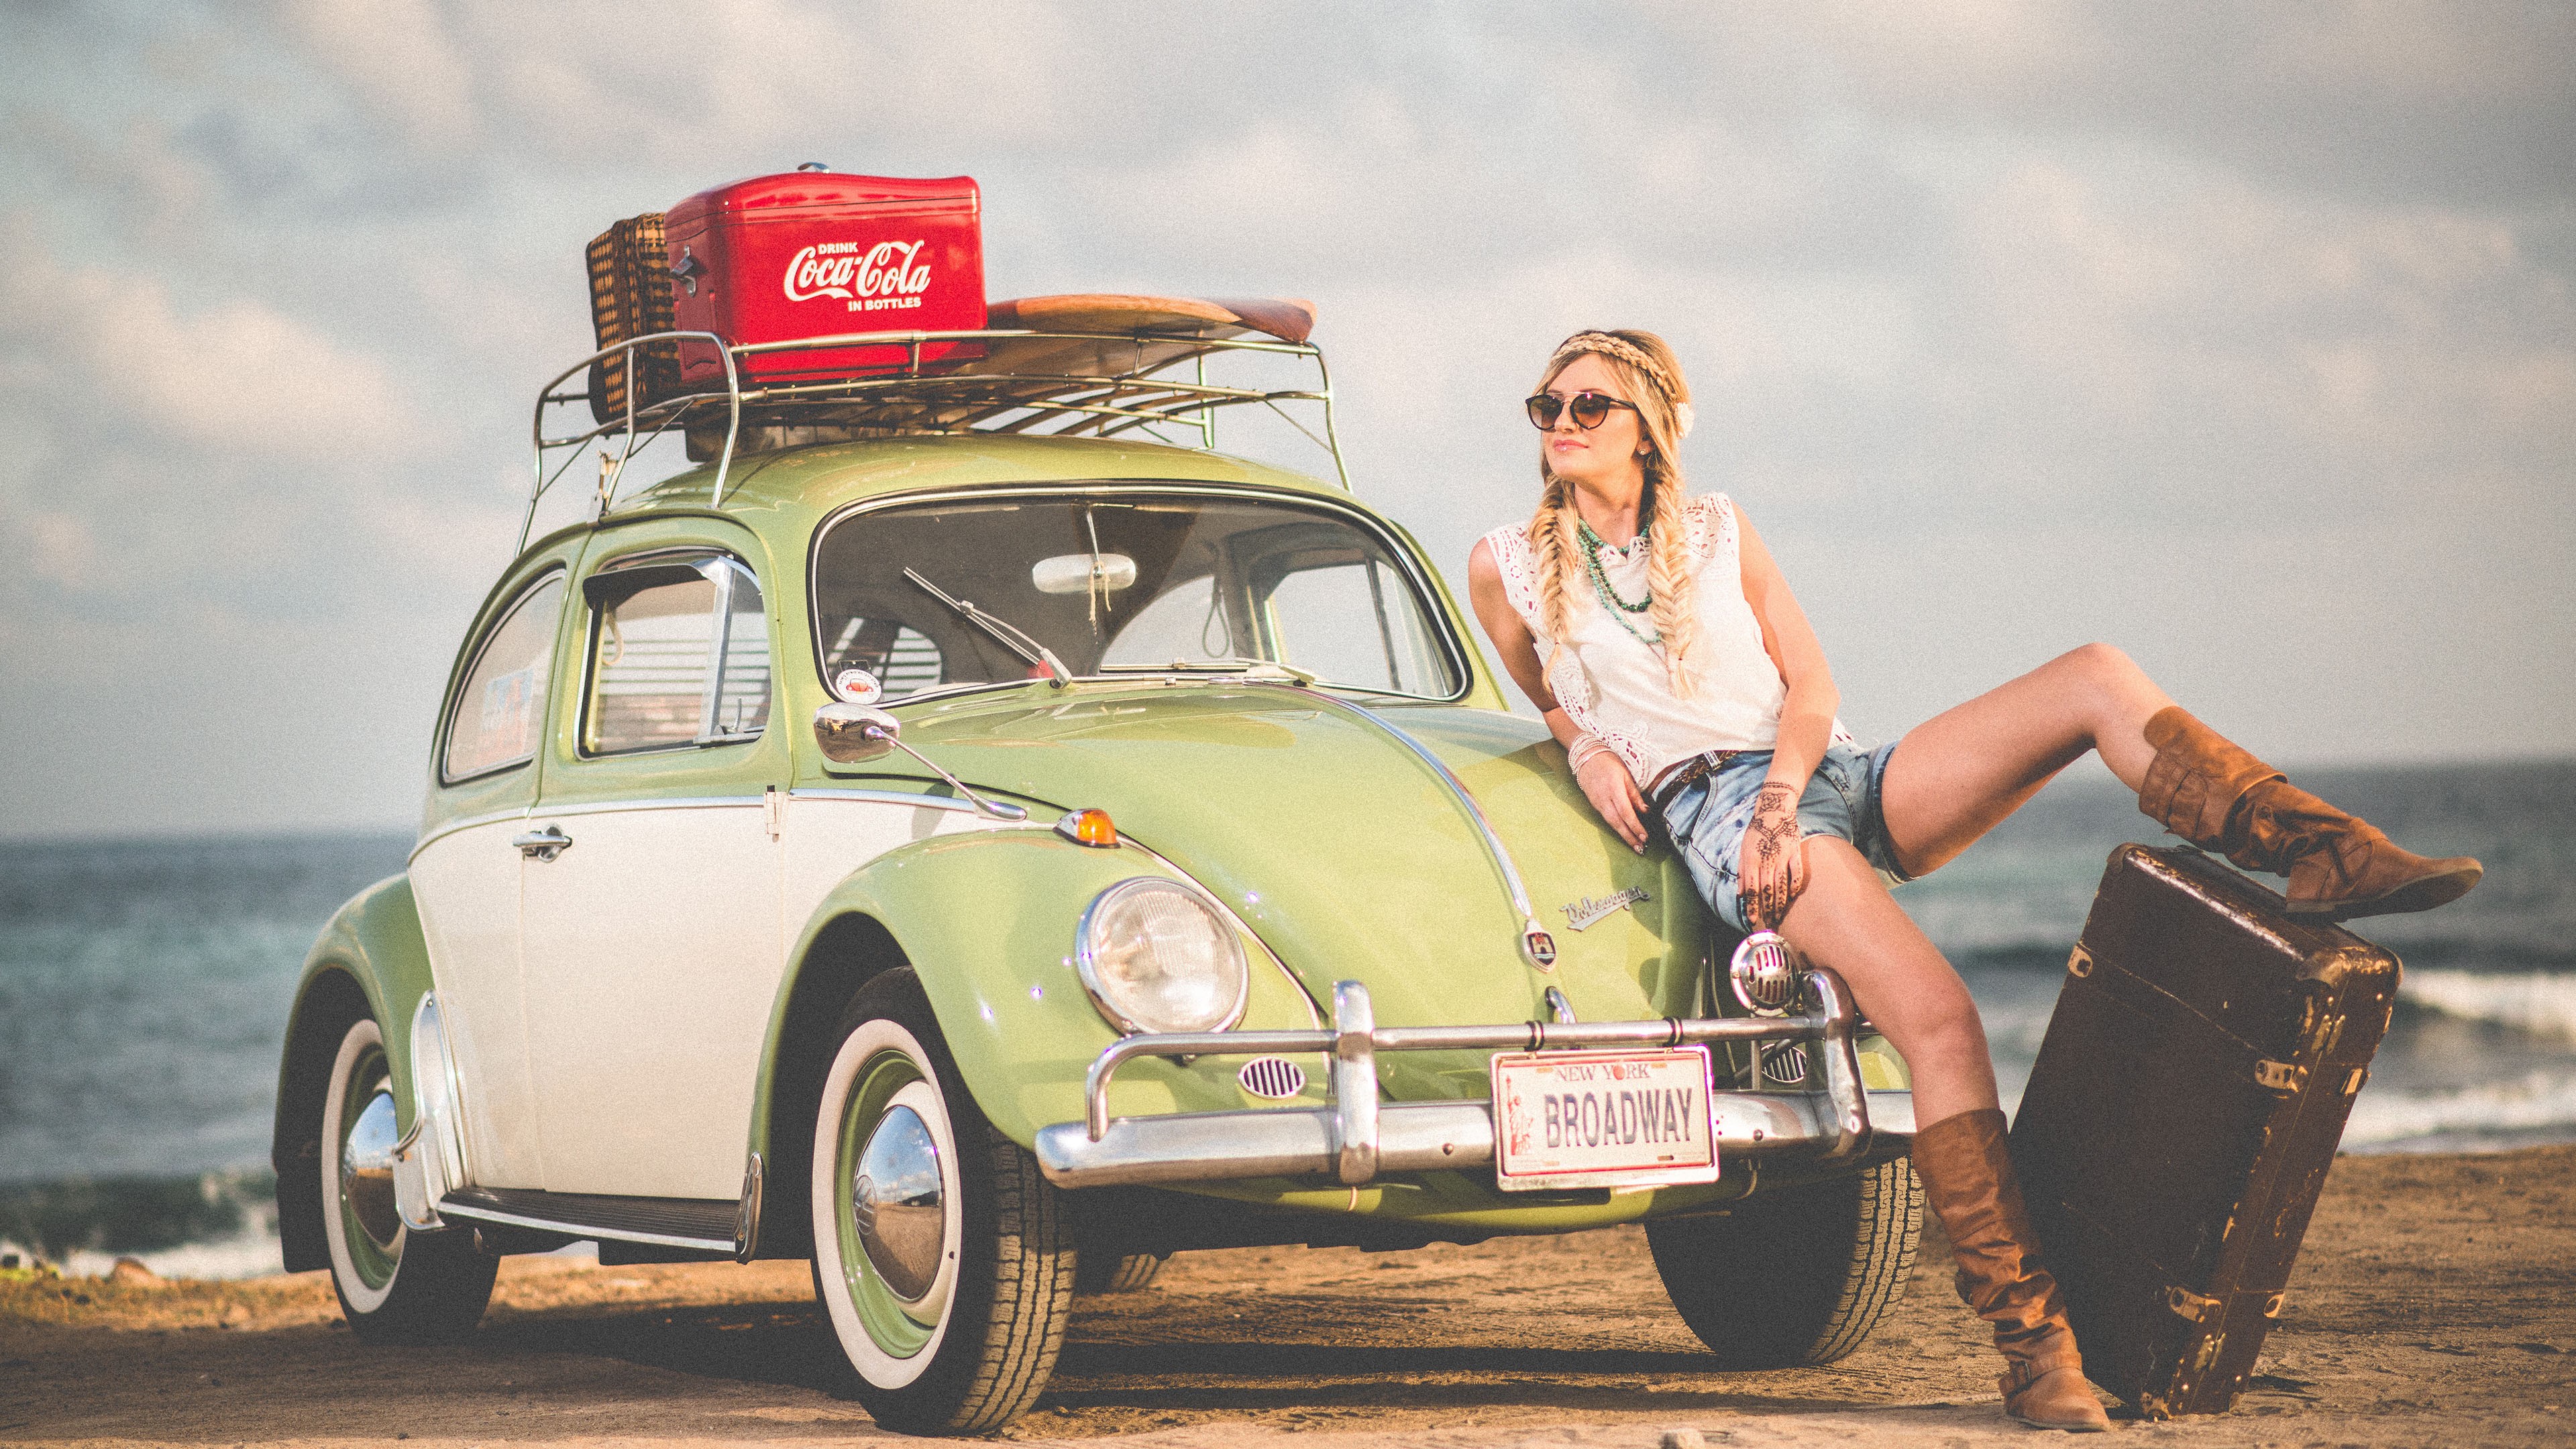 People 3840x2160 photography car Volkswagen Beetle Coca-Cola model women with cars women outdoors women